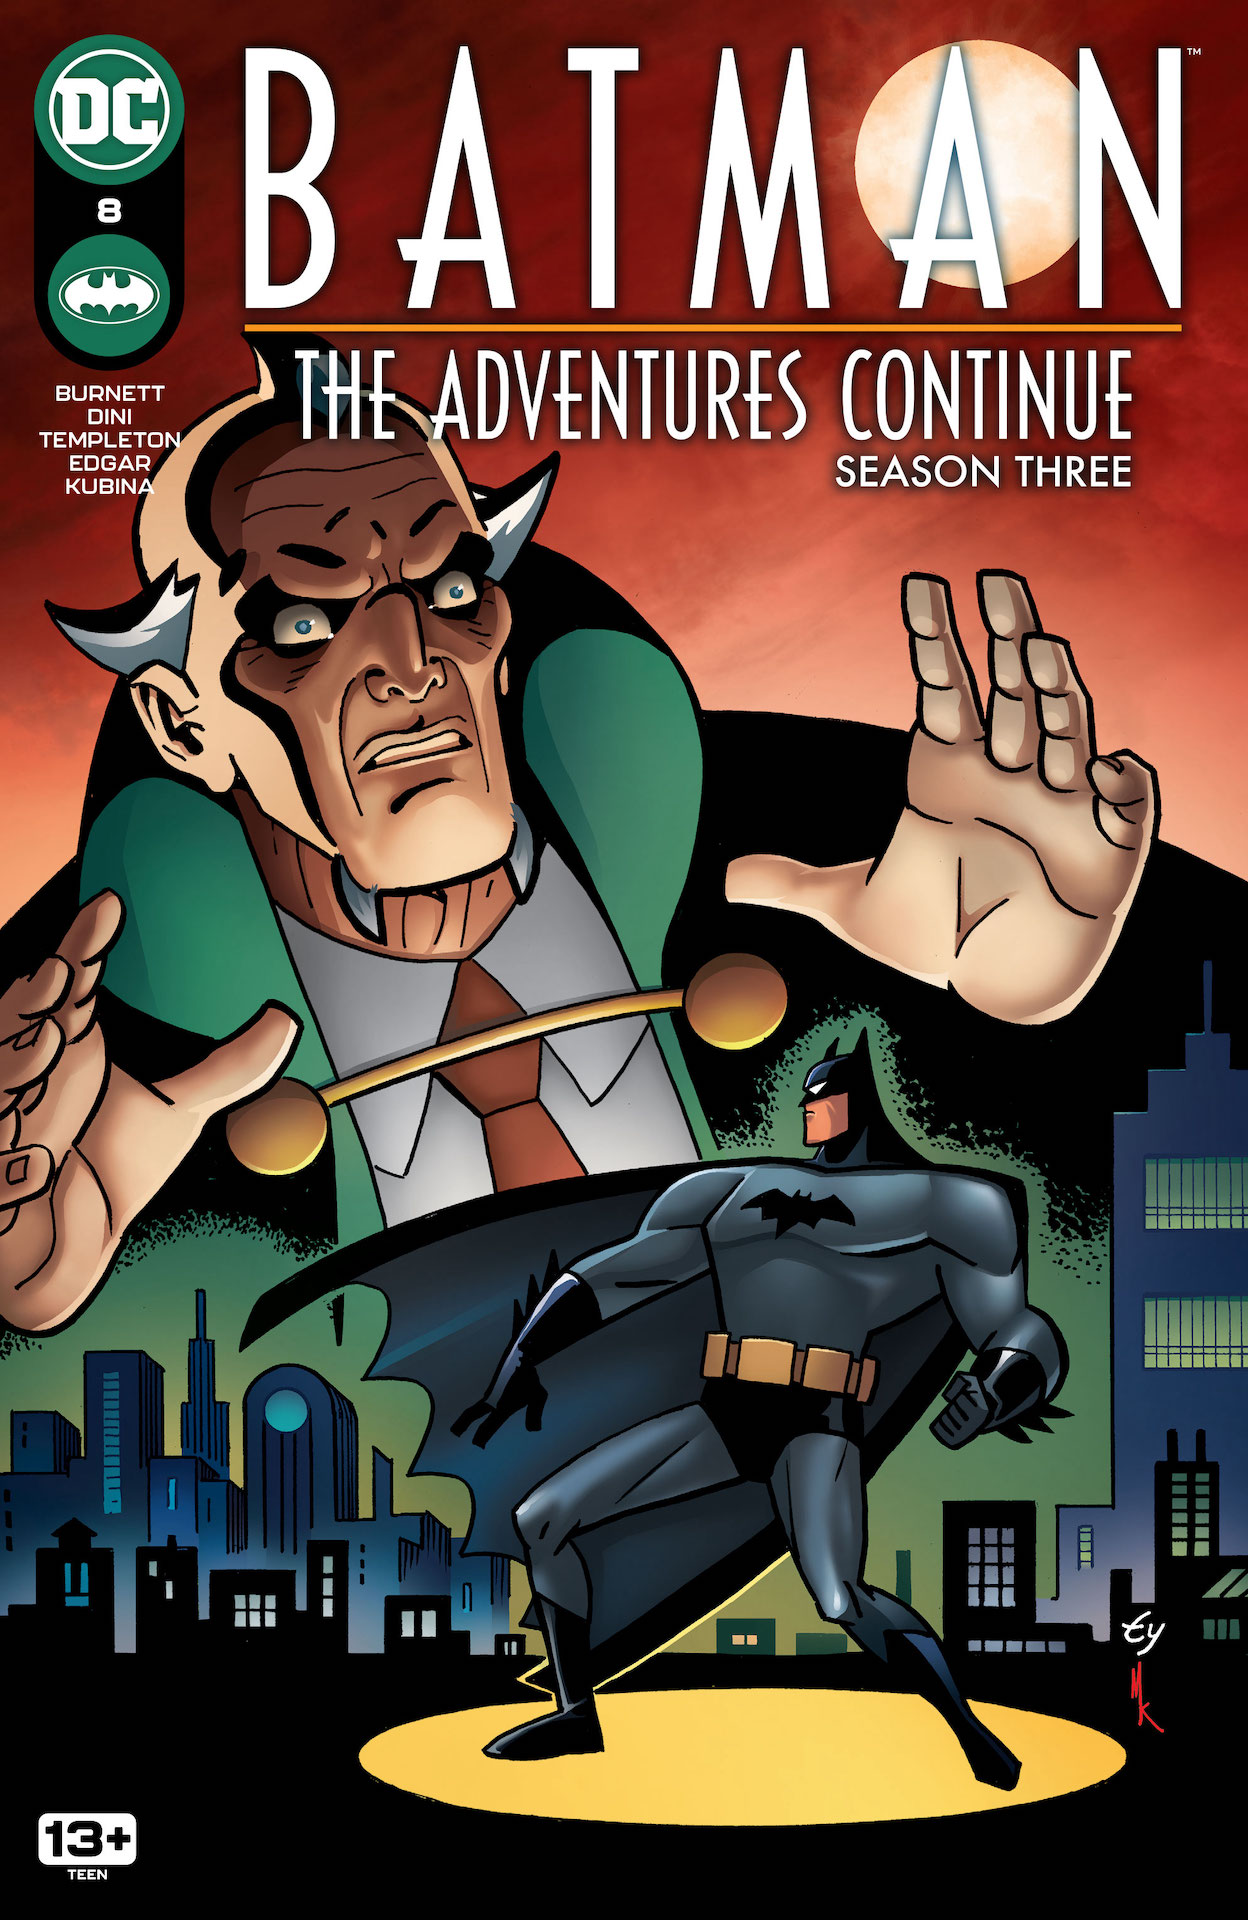 DC Preview: Batman: The Adventures Continue Season Three #8